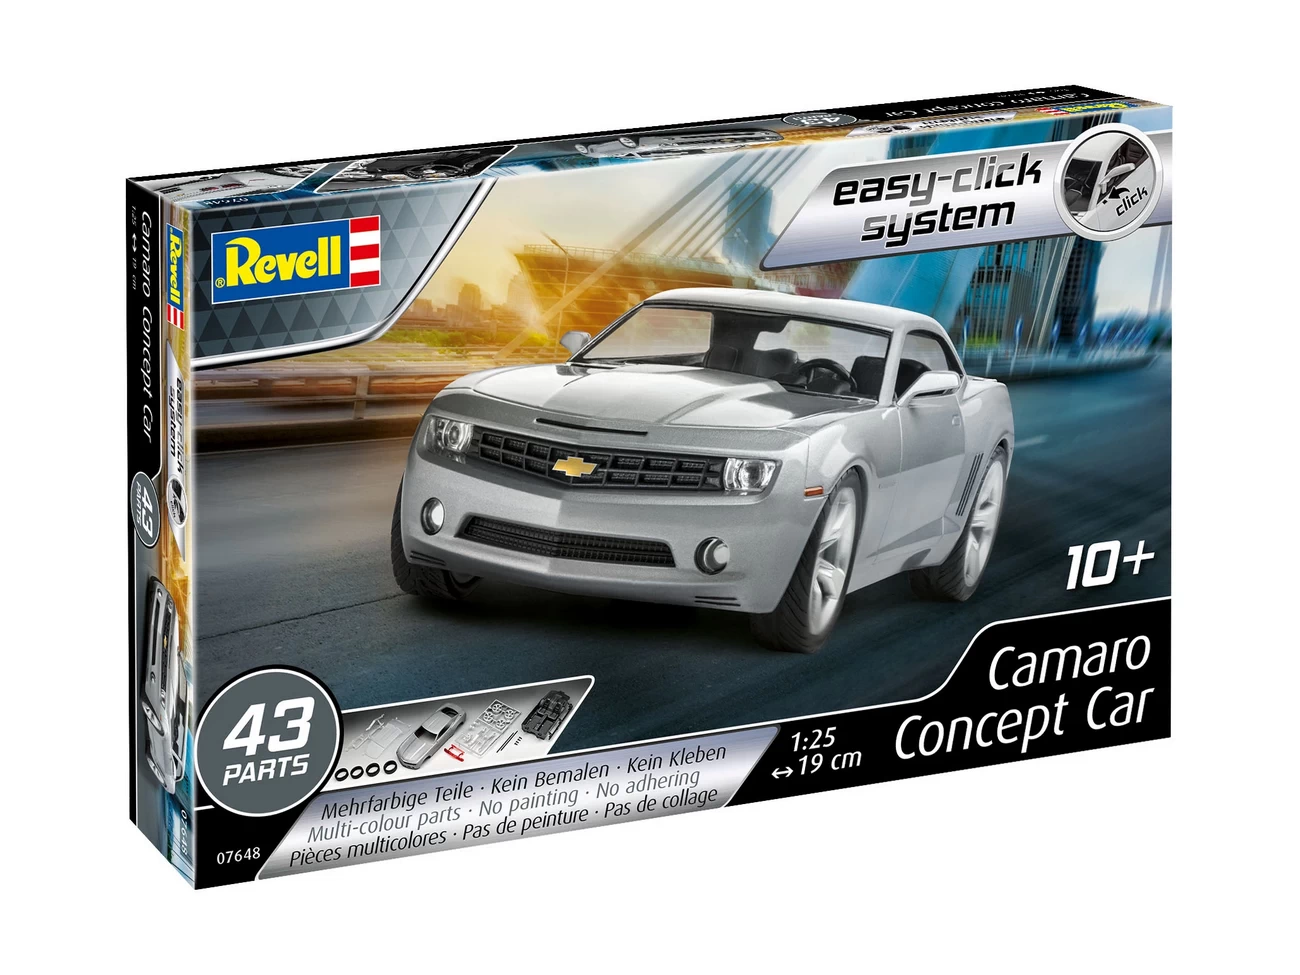 Revell 07648 - Camaro Concept Car easy-click